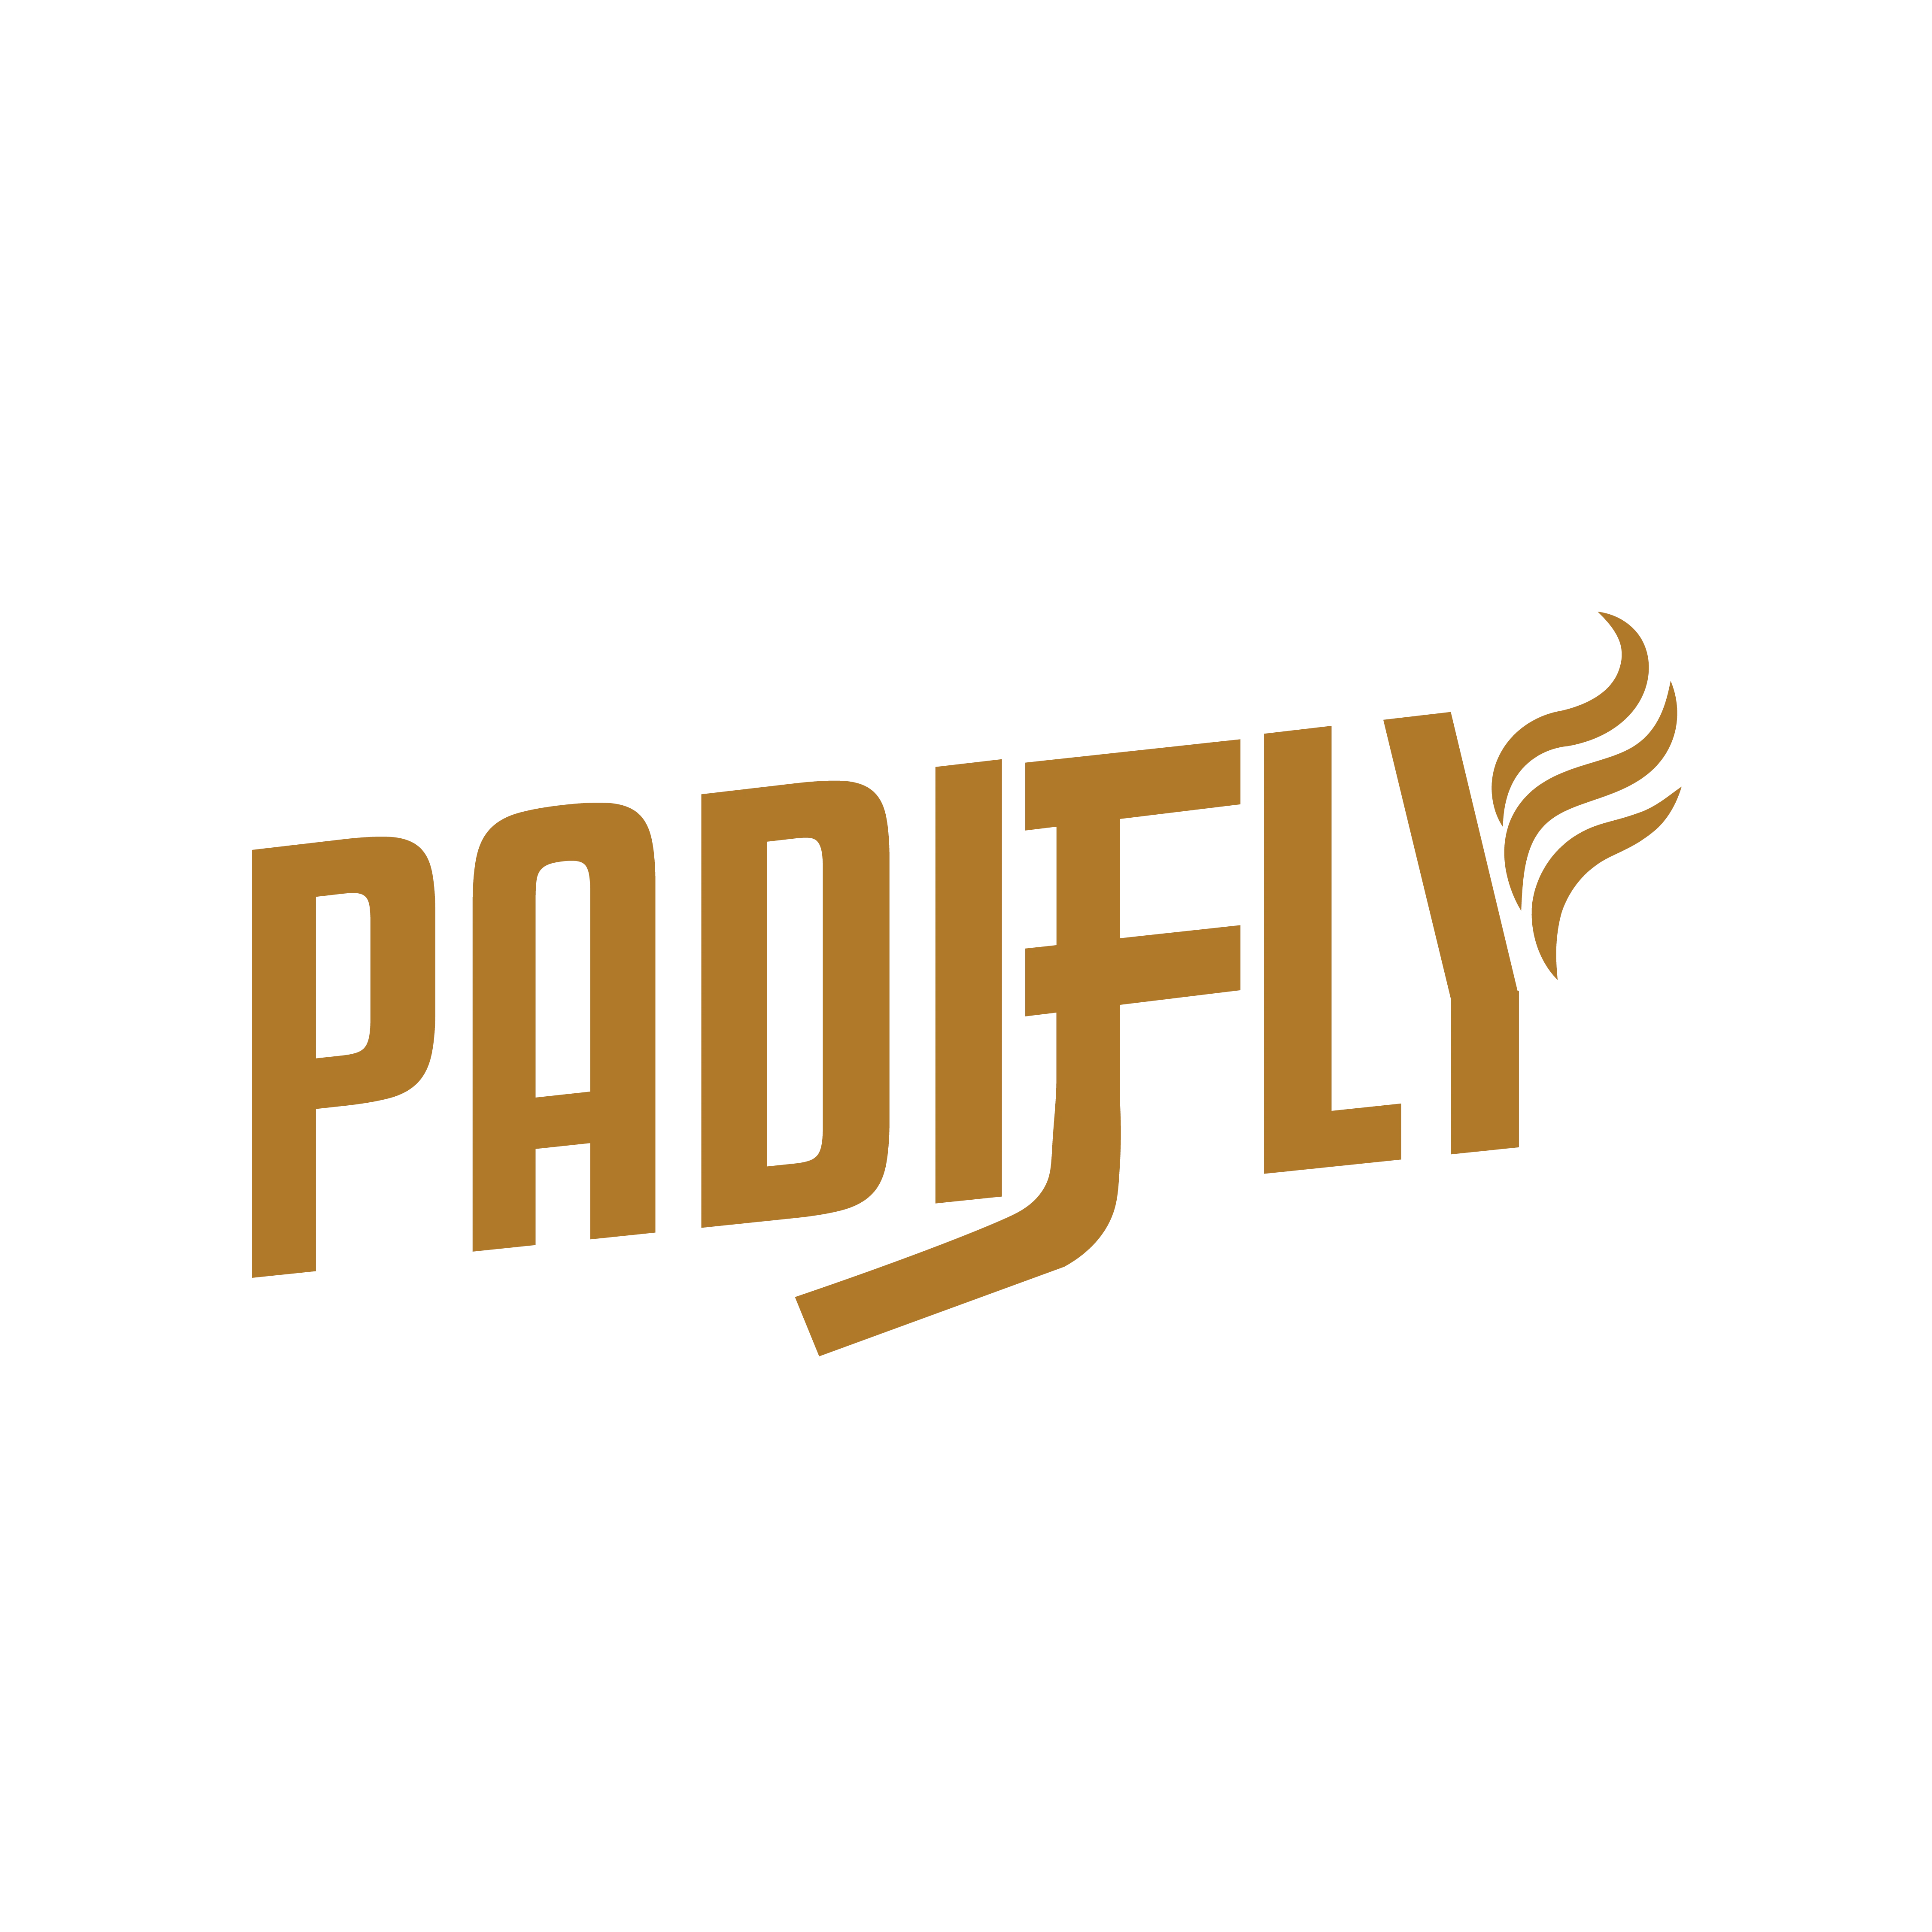 Padifly